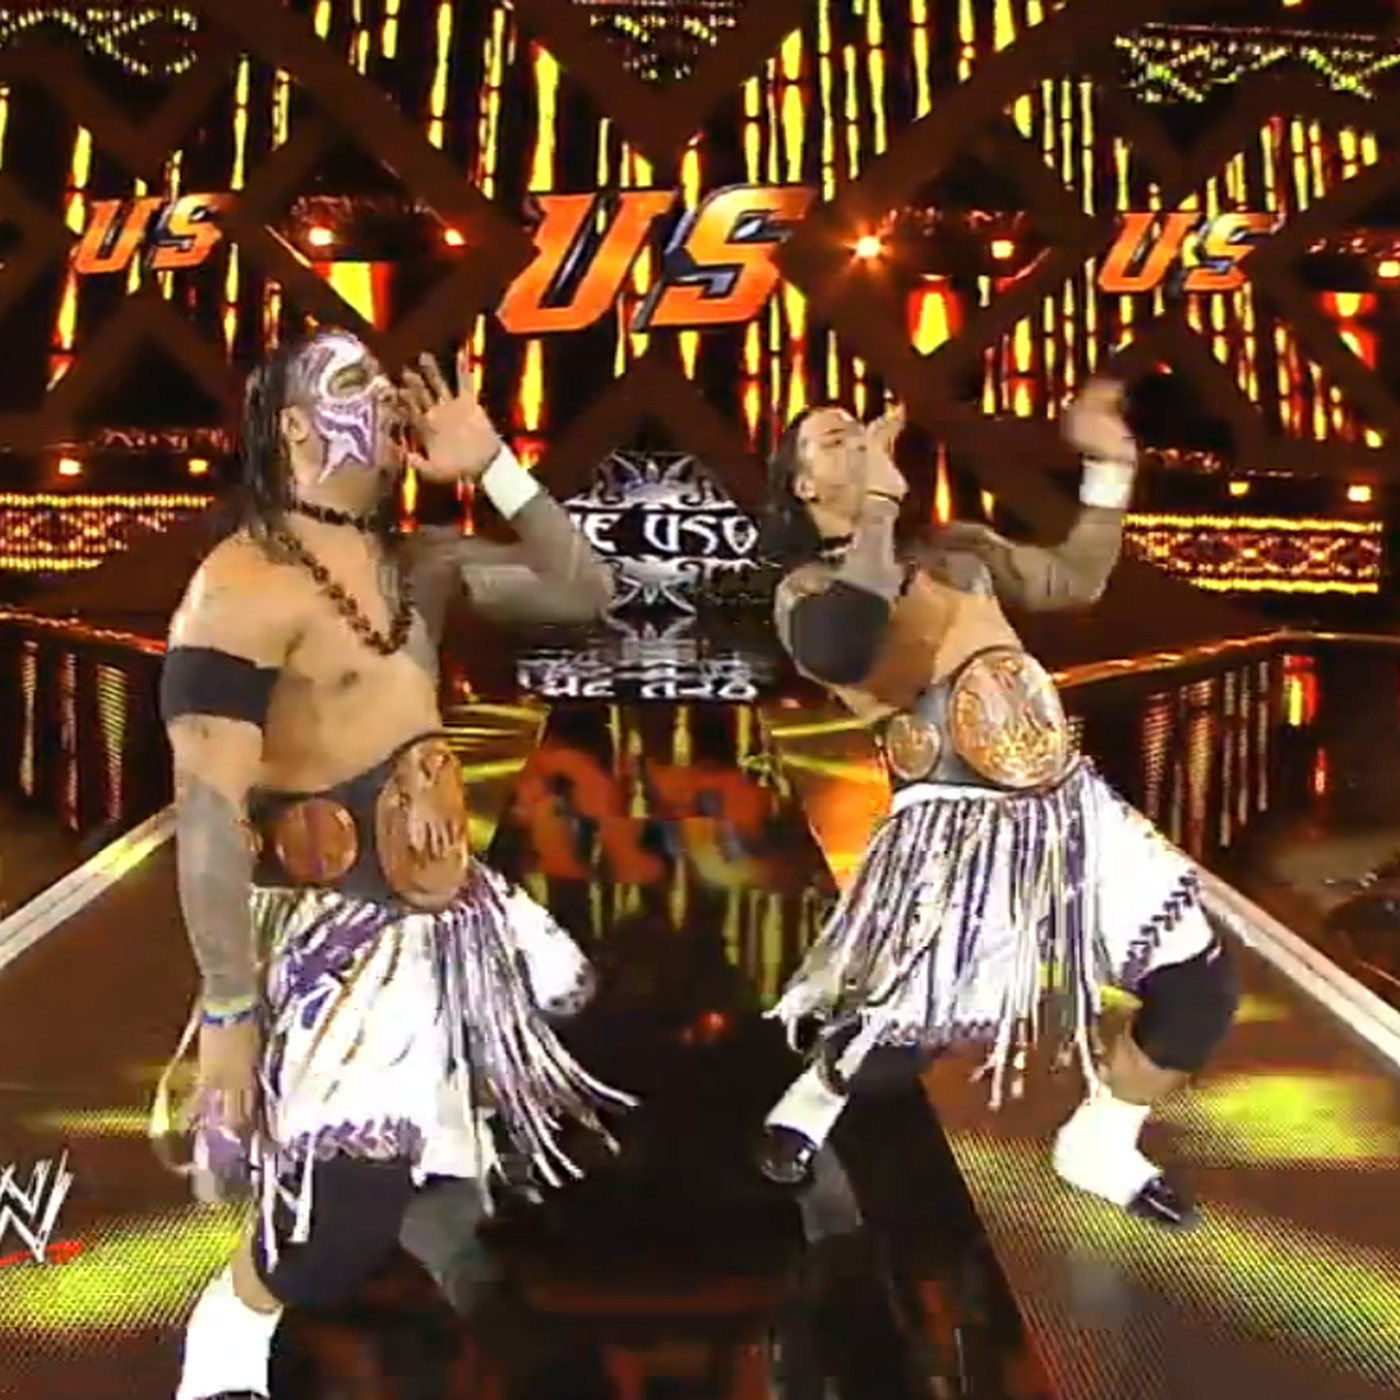 WrestleMania 30 results: The Usos retain WWE Tag Team Championship 